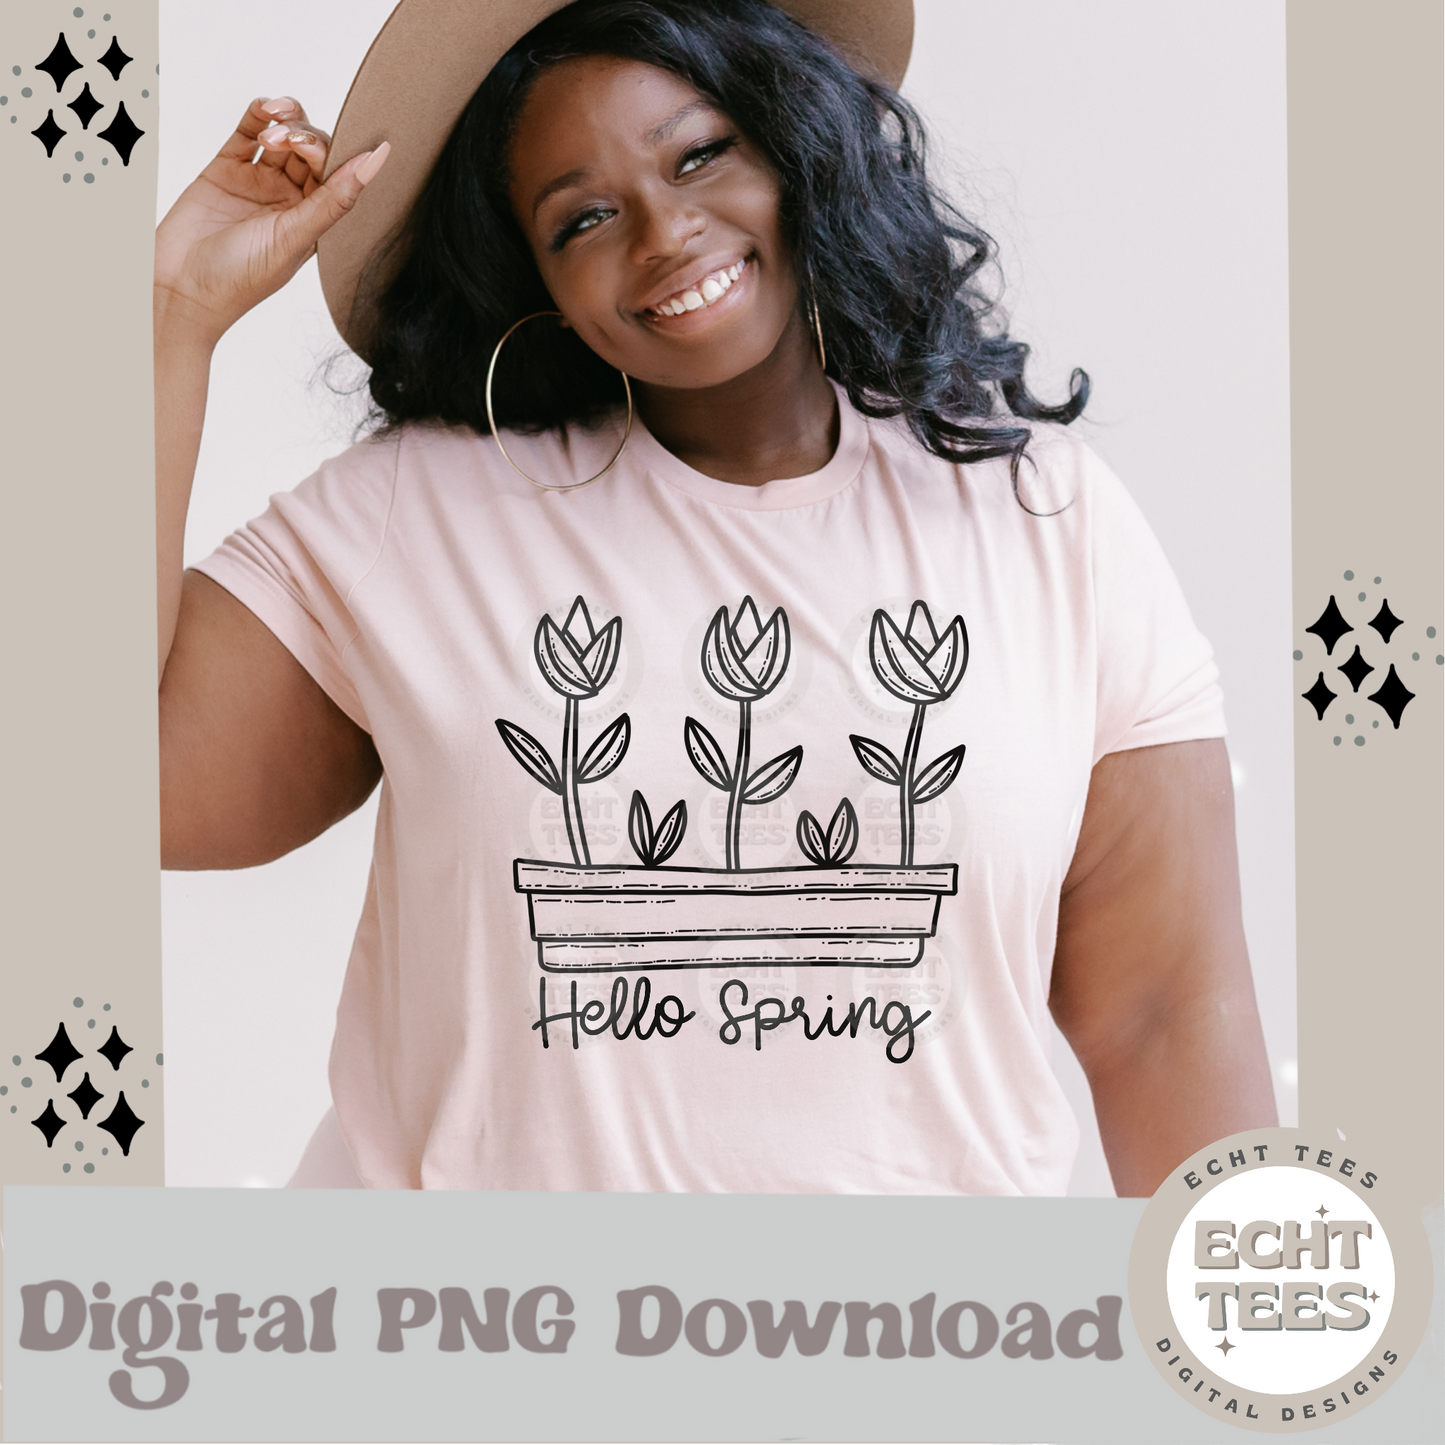 Hello spring PNG Digital Download